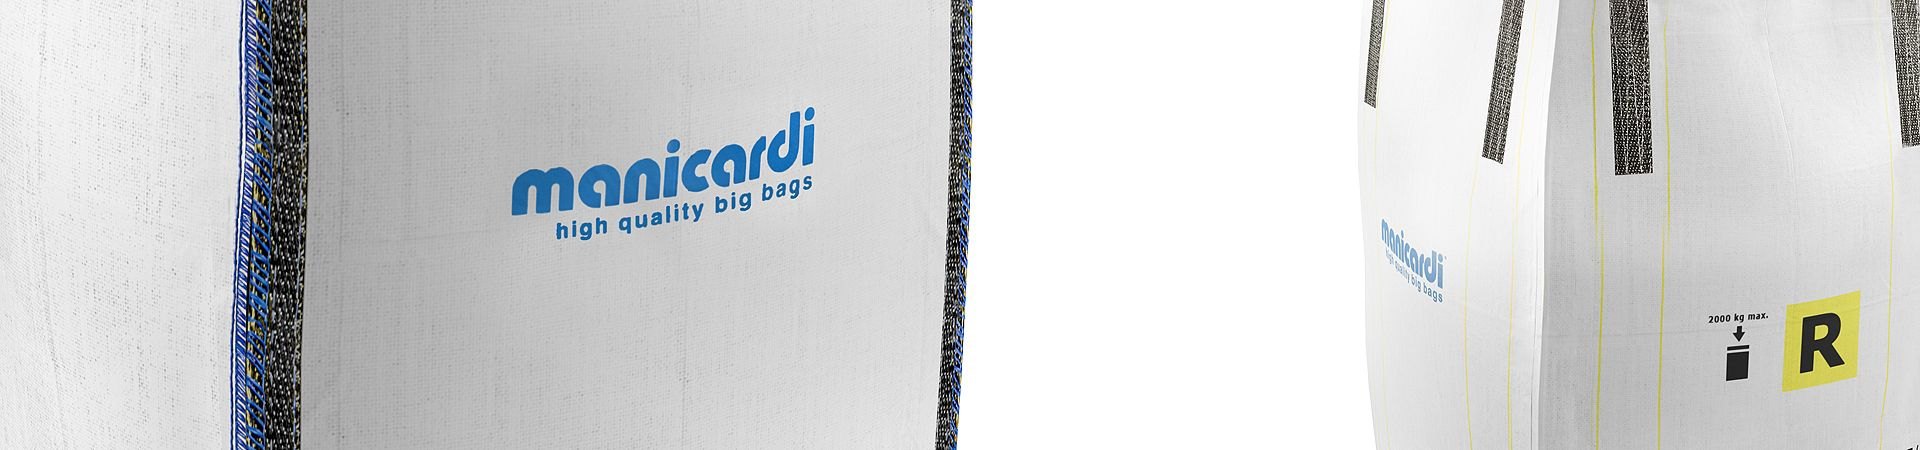 manicardi - hight quality big bags